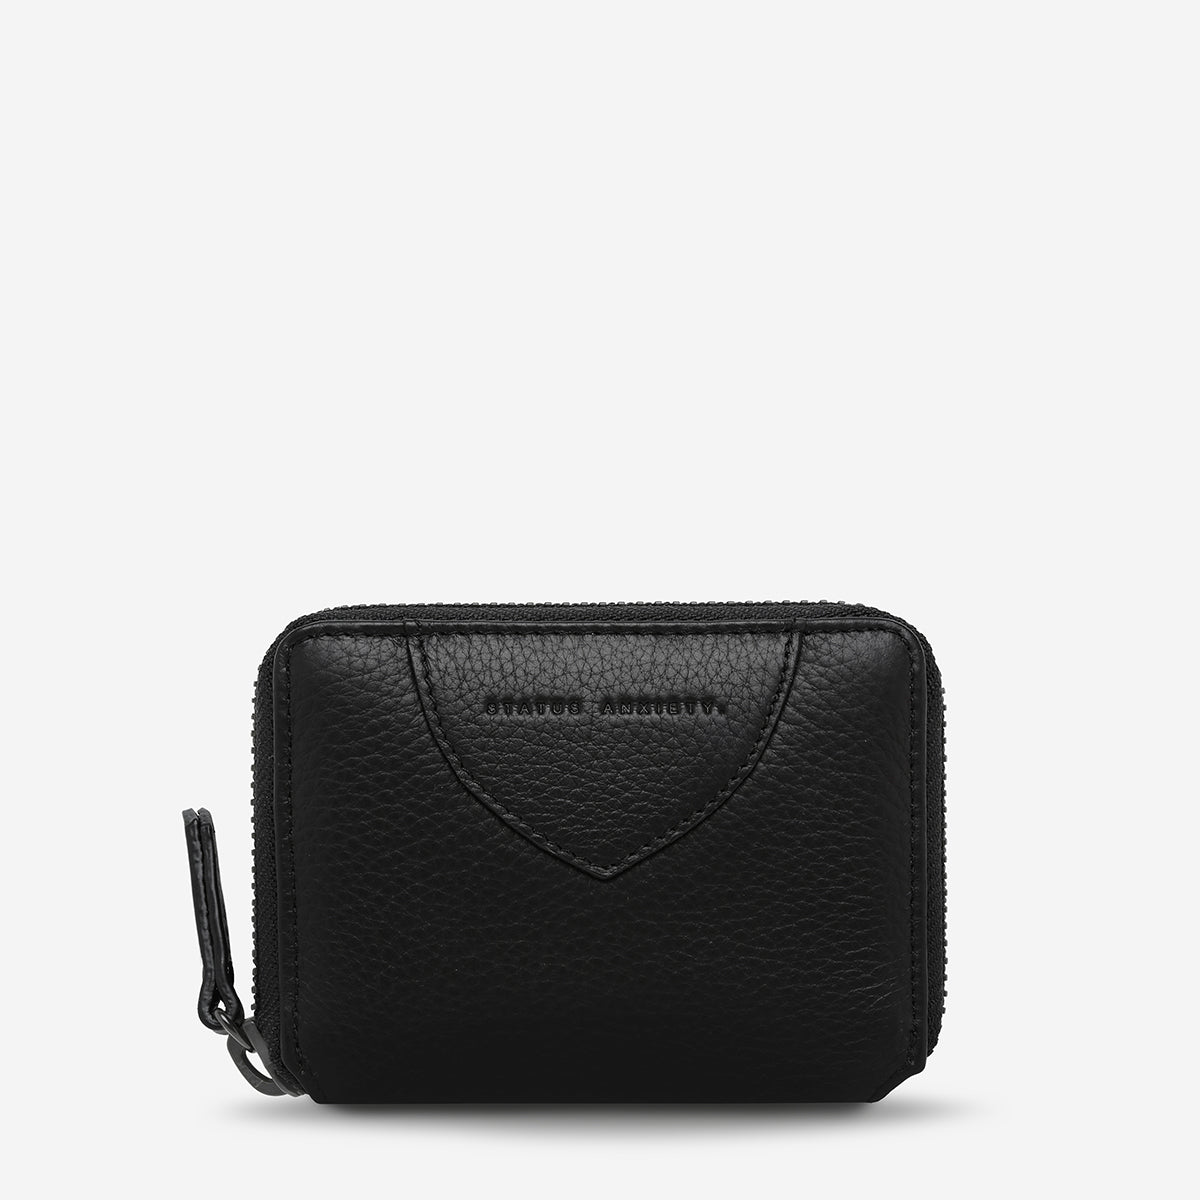 Status Anxiety Wayward Women's Leather Wallet Black